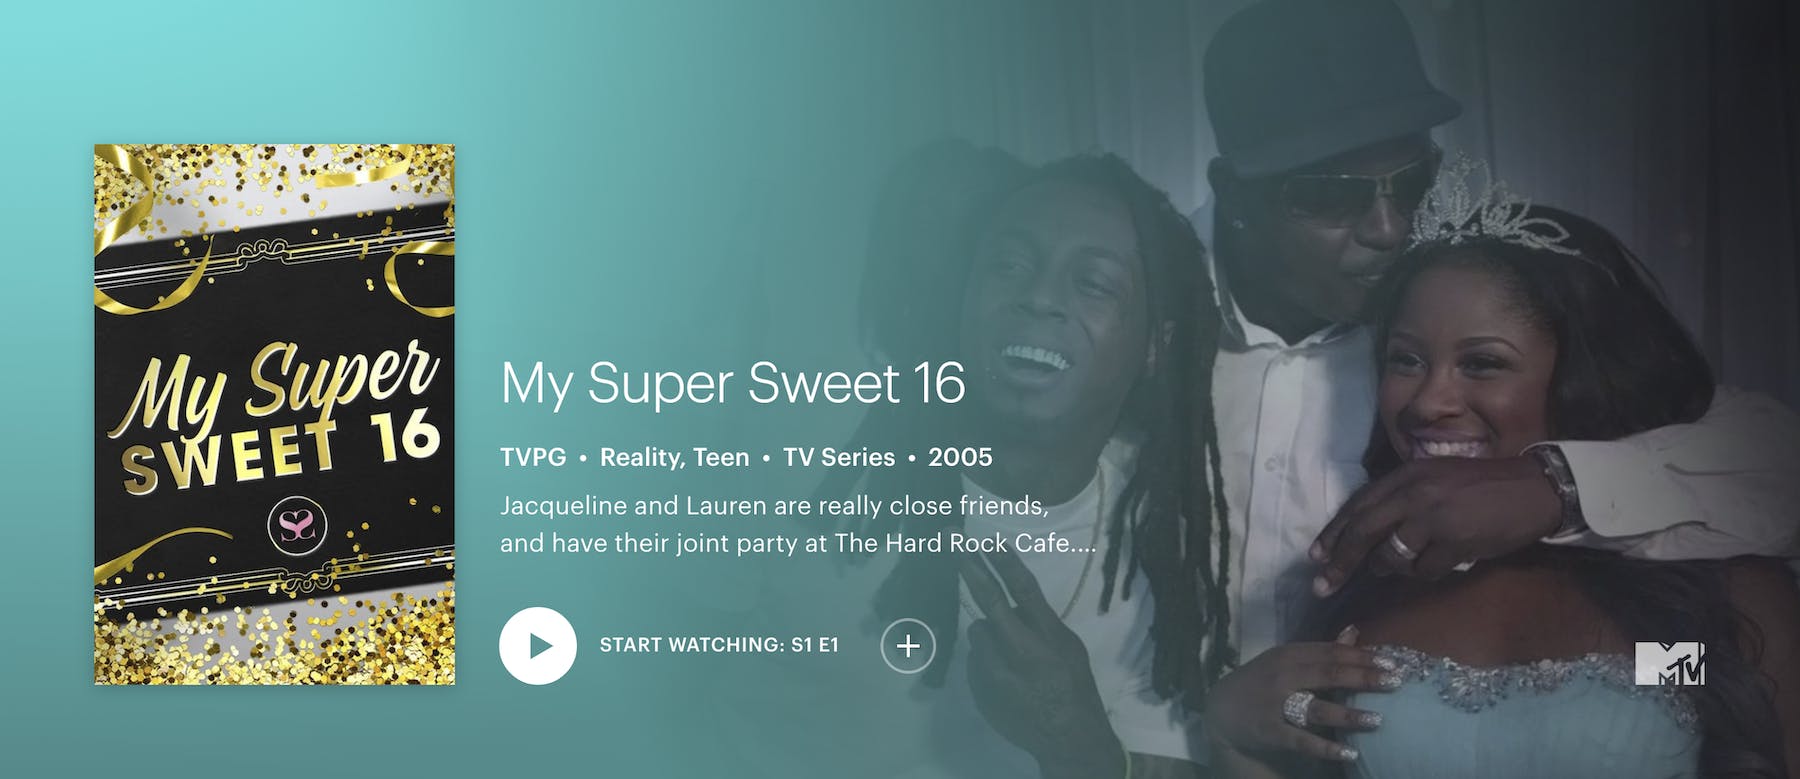 how to stream my super sweet 16 on Hulu